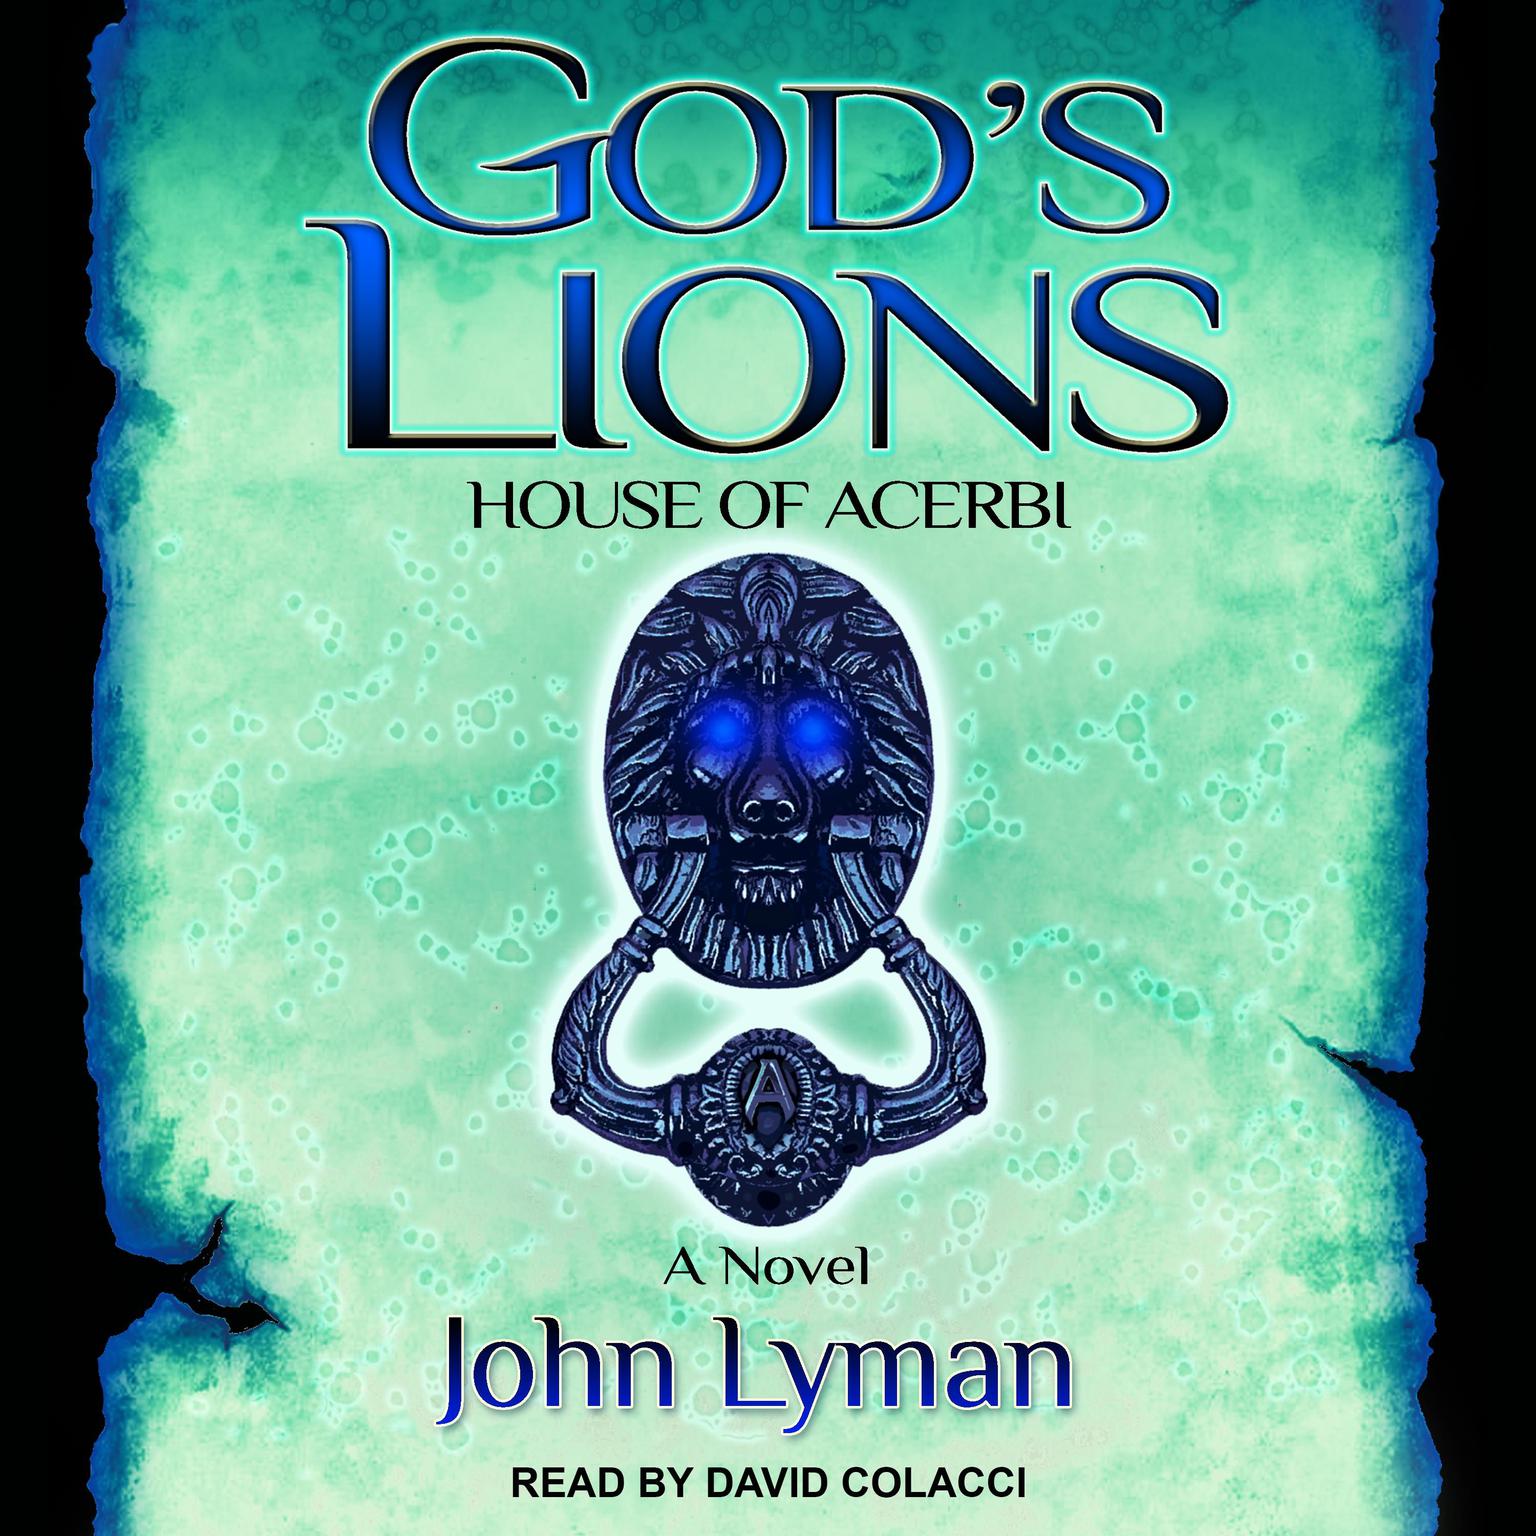 Gods Lions: Rise of the Beast Audiobook, by John Lyman